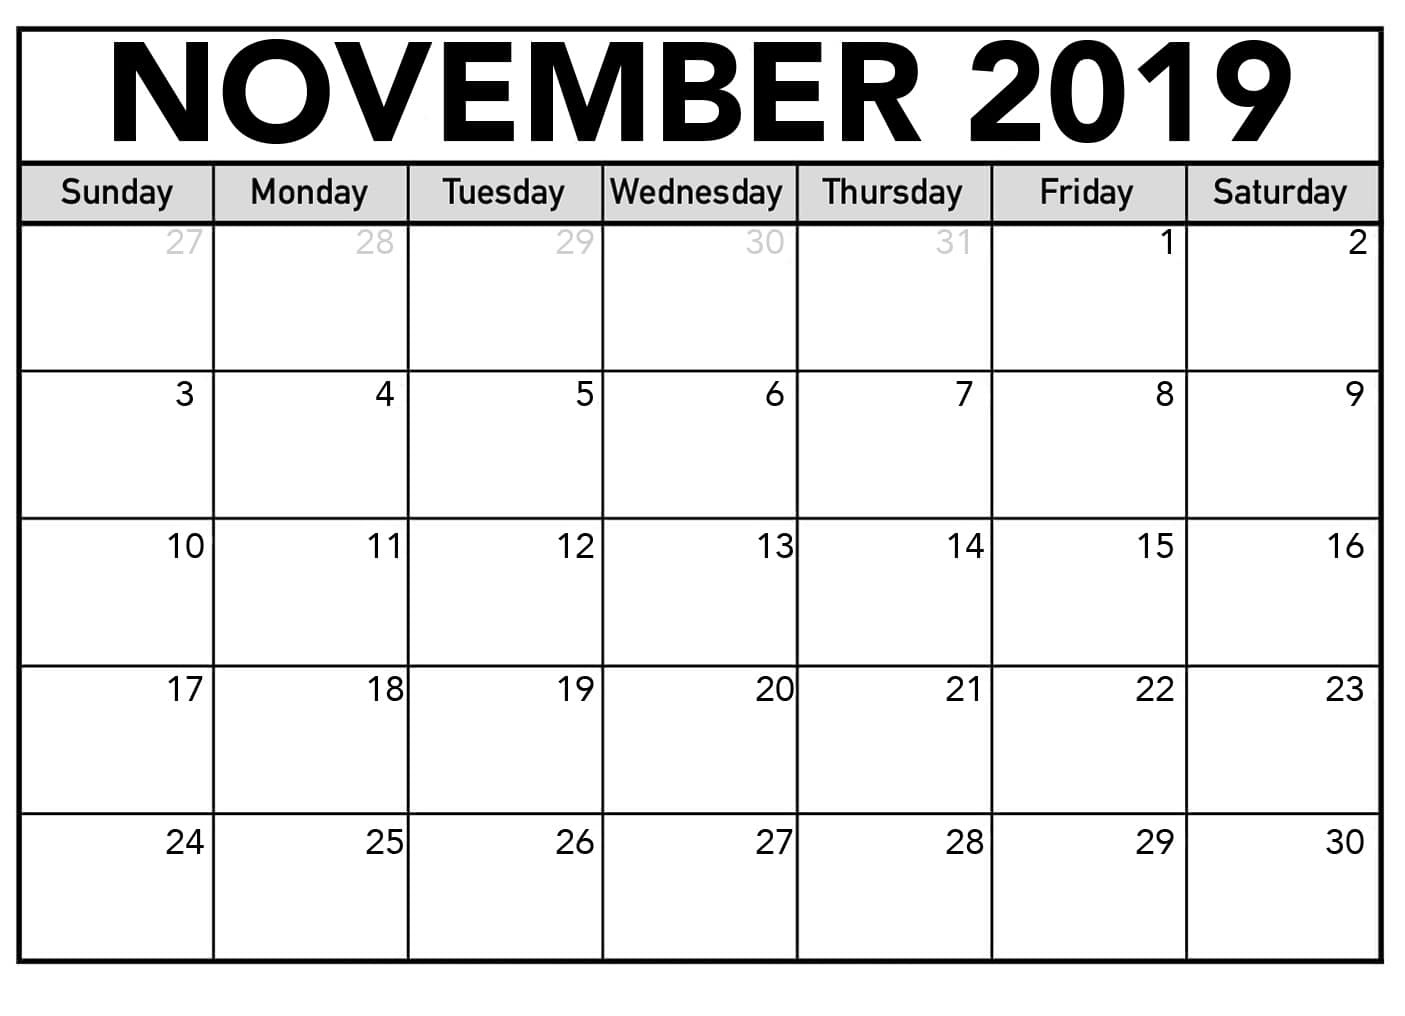 November 2019 Printable Calendar One Page Template - Latest